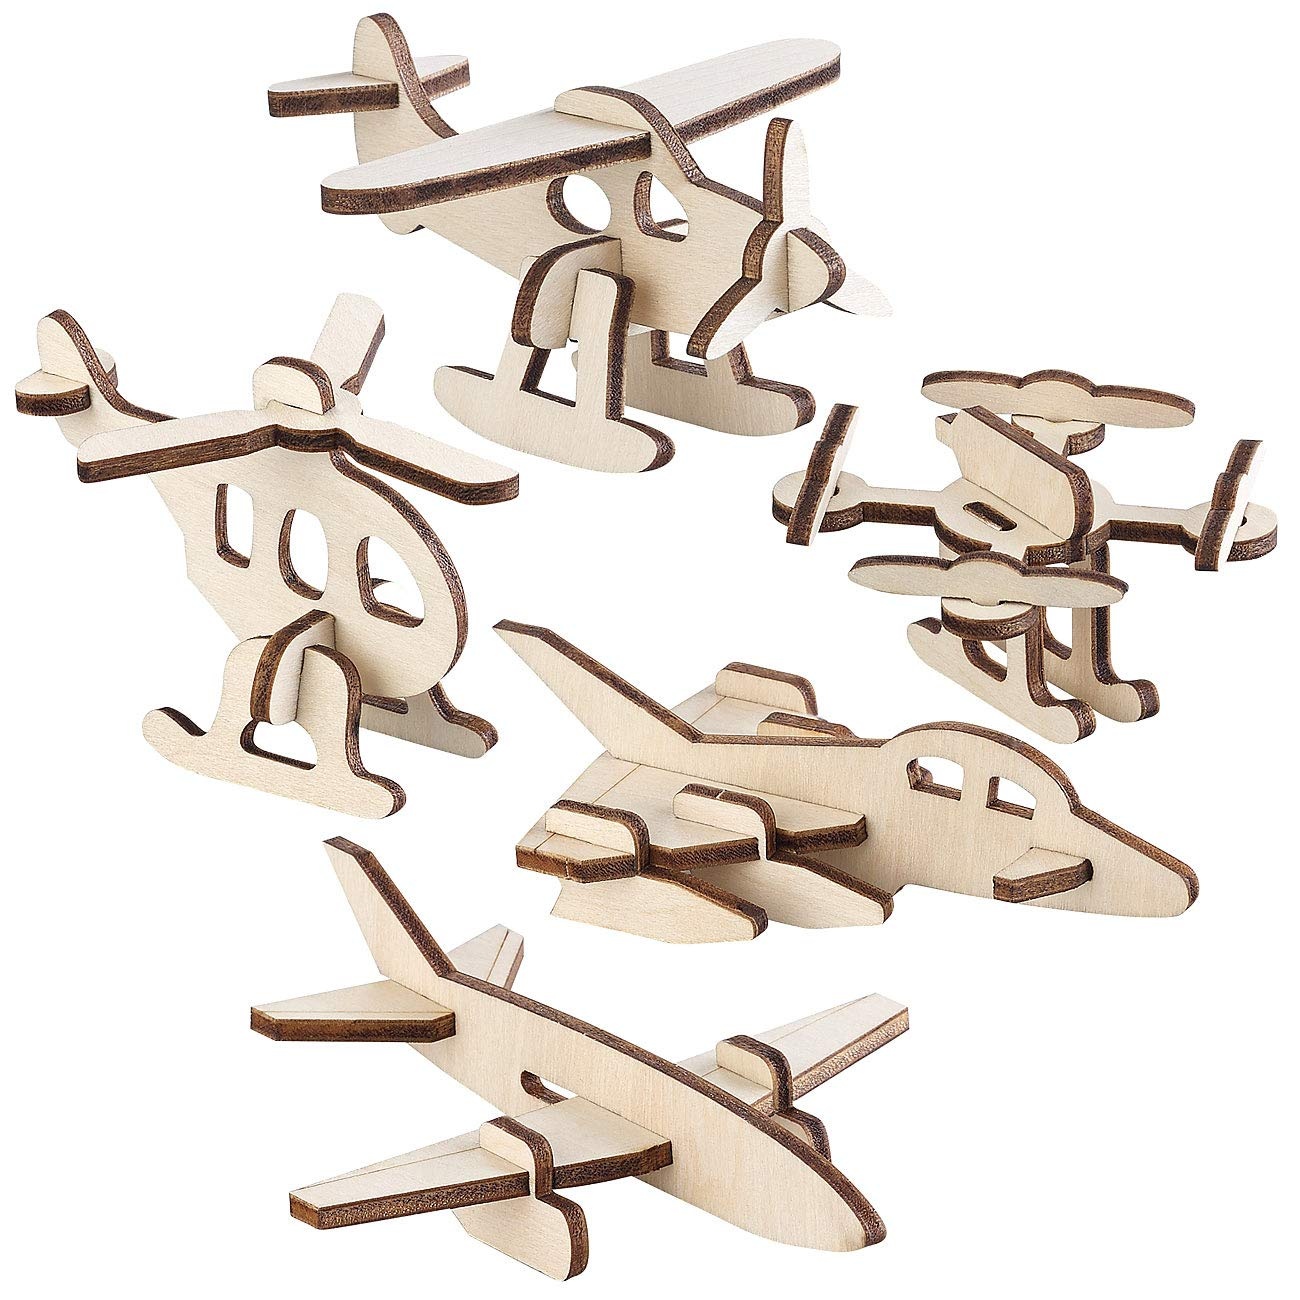 Playtastic 3D Puzzle: 5er-Set 3D-Bausätze Mini-Flugmaschinen aus Holz, 33-teilig (Holzbausätze für Senioren, 3D-Puzzle Holz Kinder, Geduldspiele)